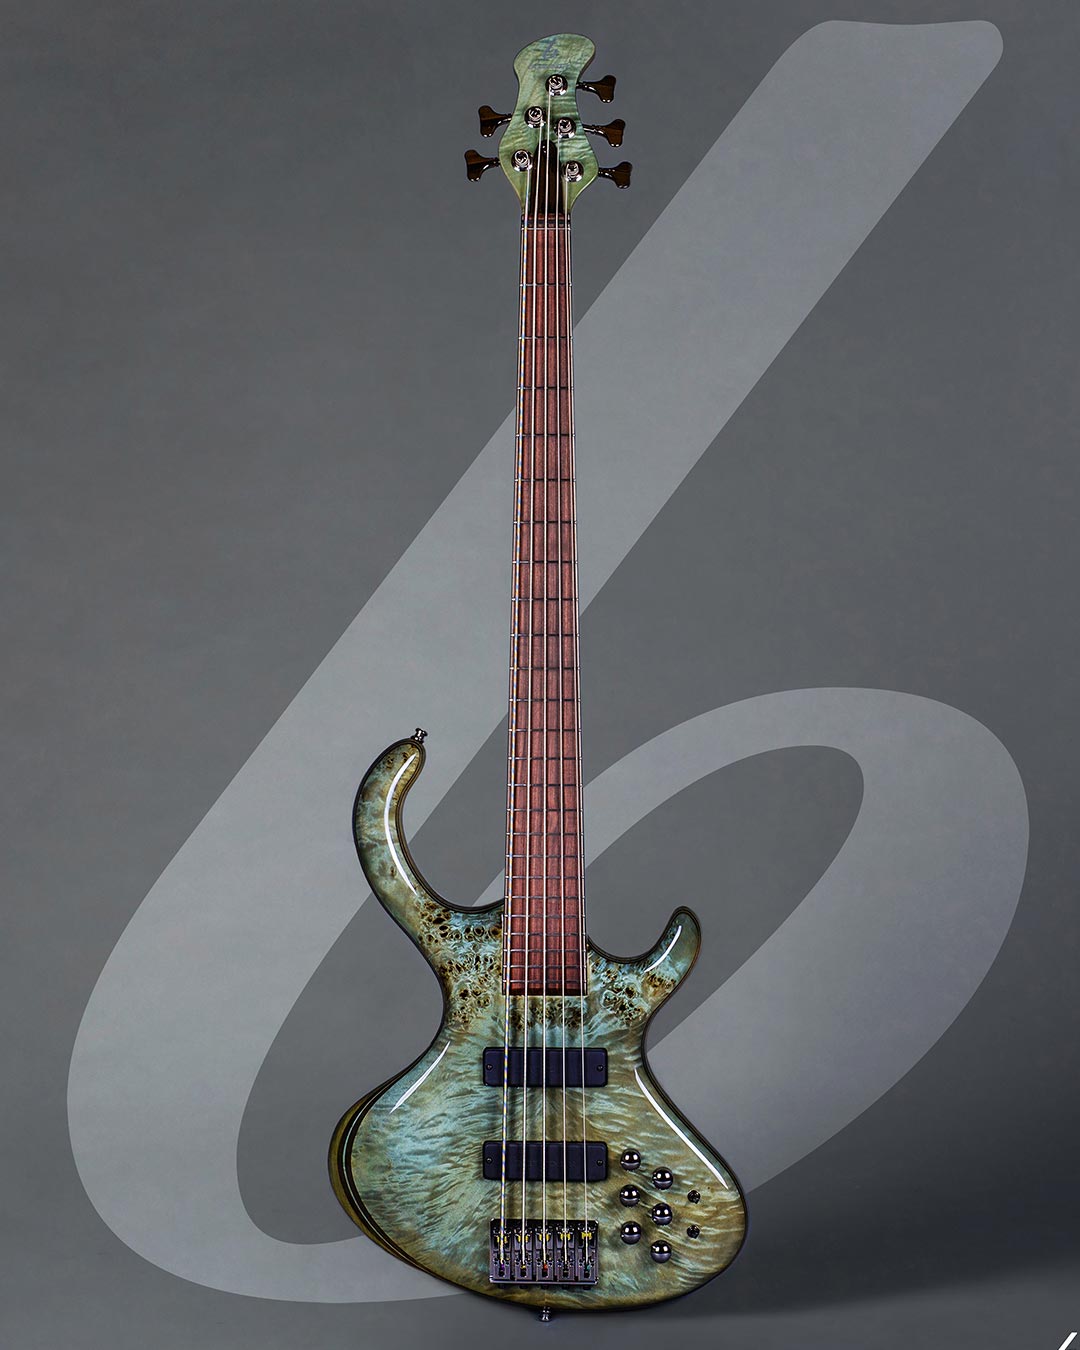 Blasius Kata5 Custom made bass guitar